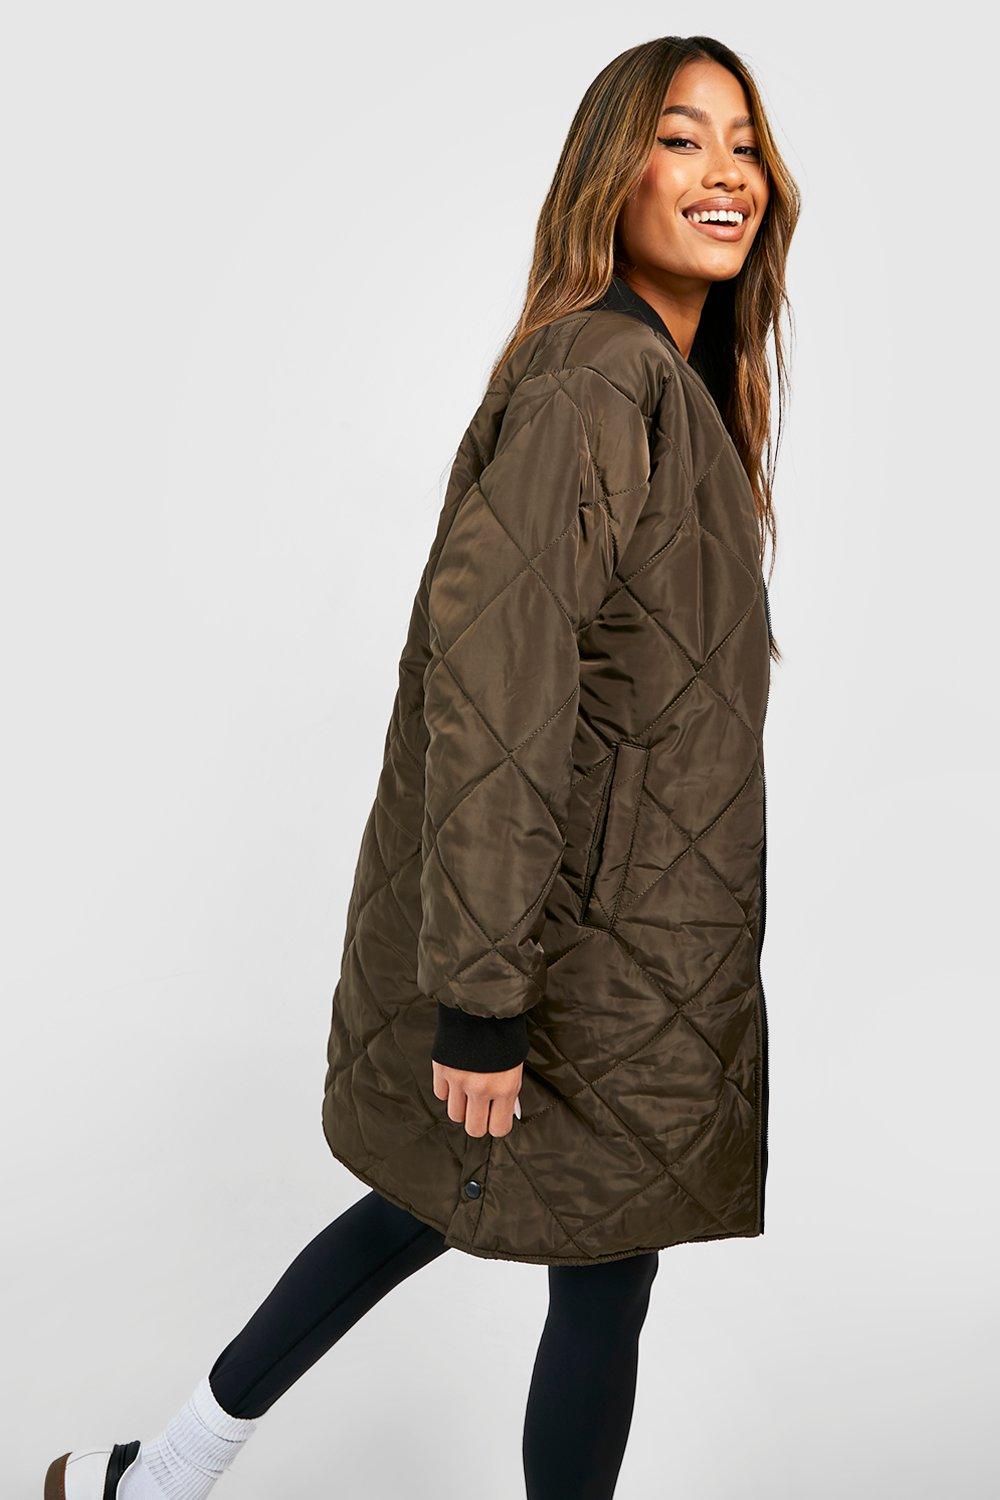 https://media.boohoo.com/i/boohoo/gzz51370_khaki_xl_2/female-khaki-longline-quilted-bomber-jacket